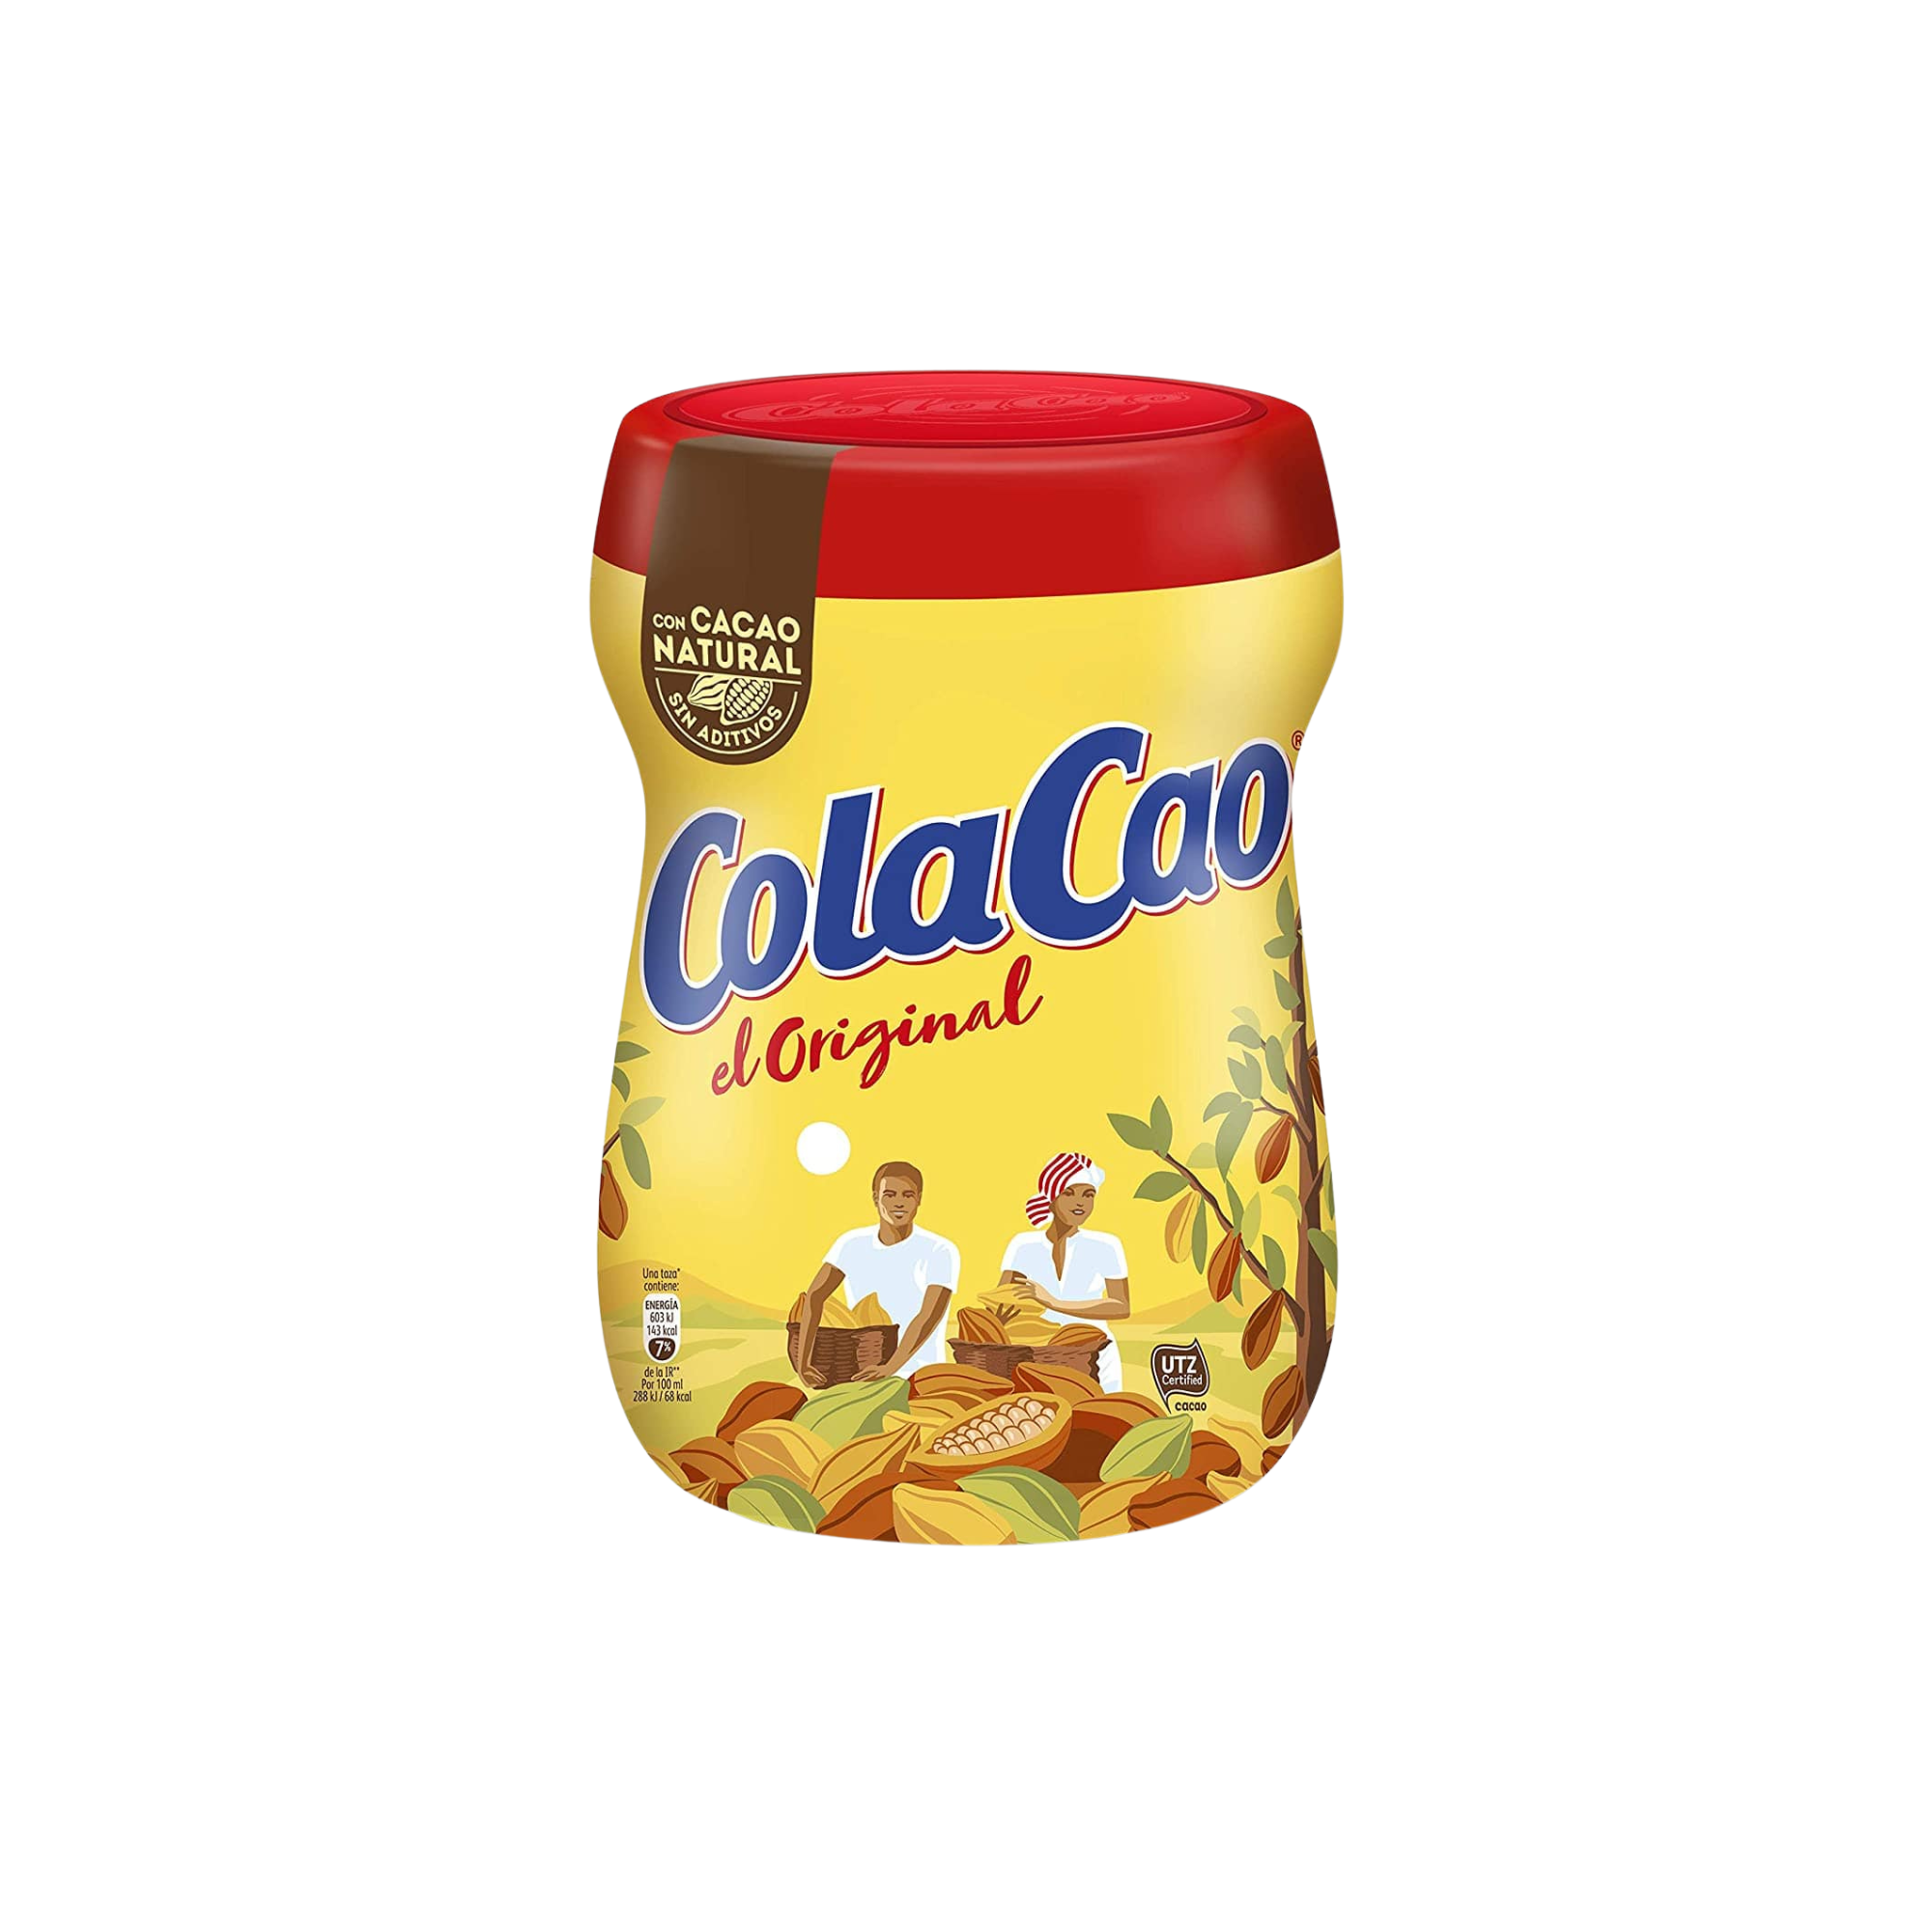 Original Colacao: With Natural Cocoa-6 18g Envelopes - Laundry